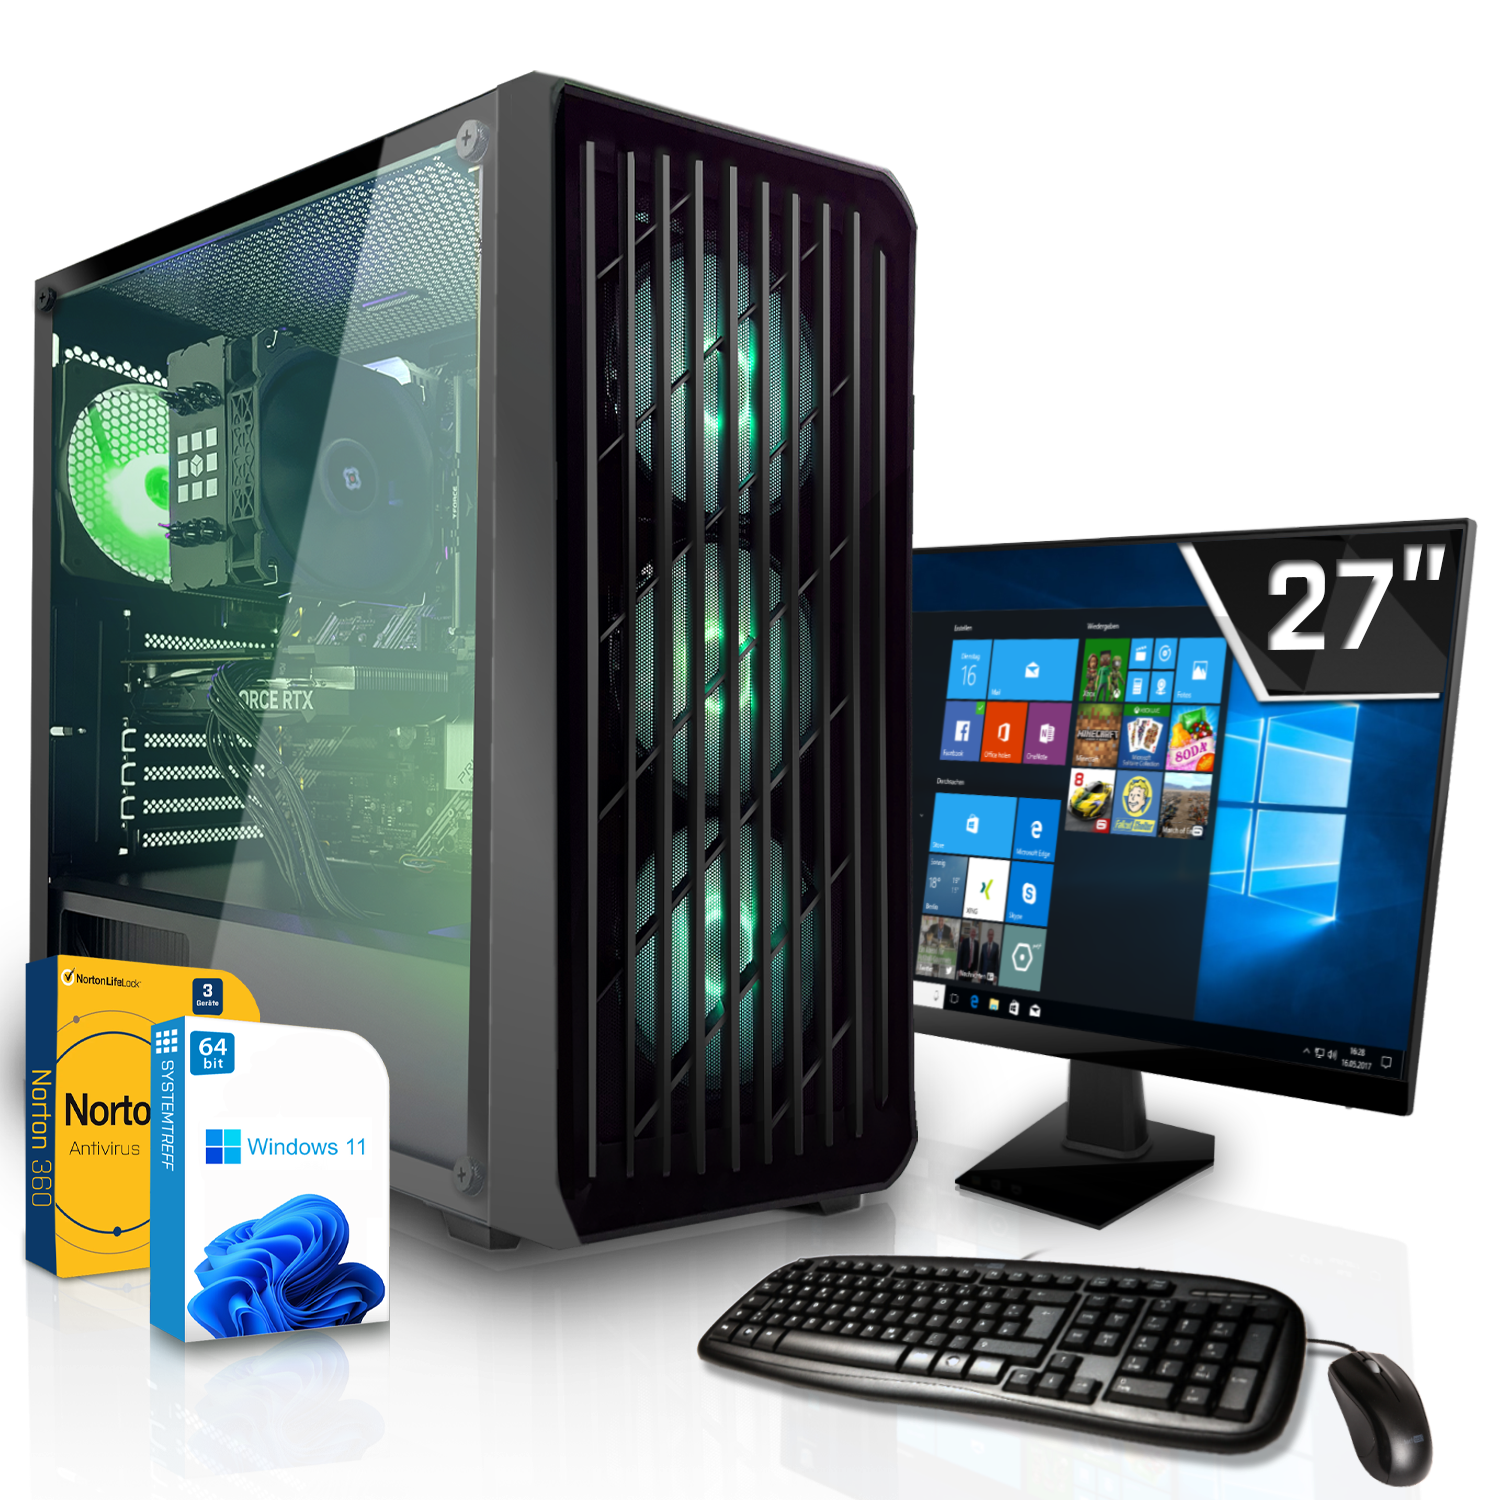 SYSTEMTREFF Gaming Komplett Radeon PRO mit Core, Prozessor, Ryzen Komplett AMD - Vega GB 512 7 5 GB 4 GB PC AMD RAM, 8 RX PRO mSSD, 4650G 4650G